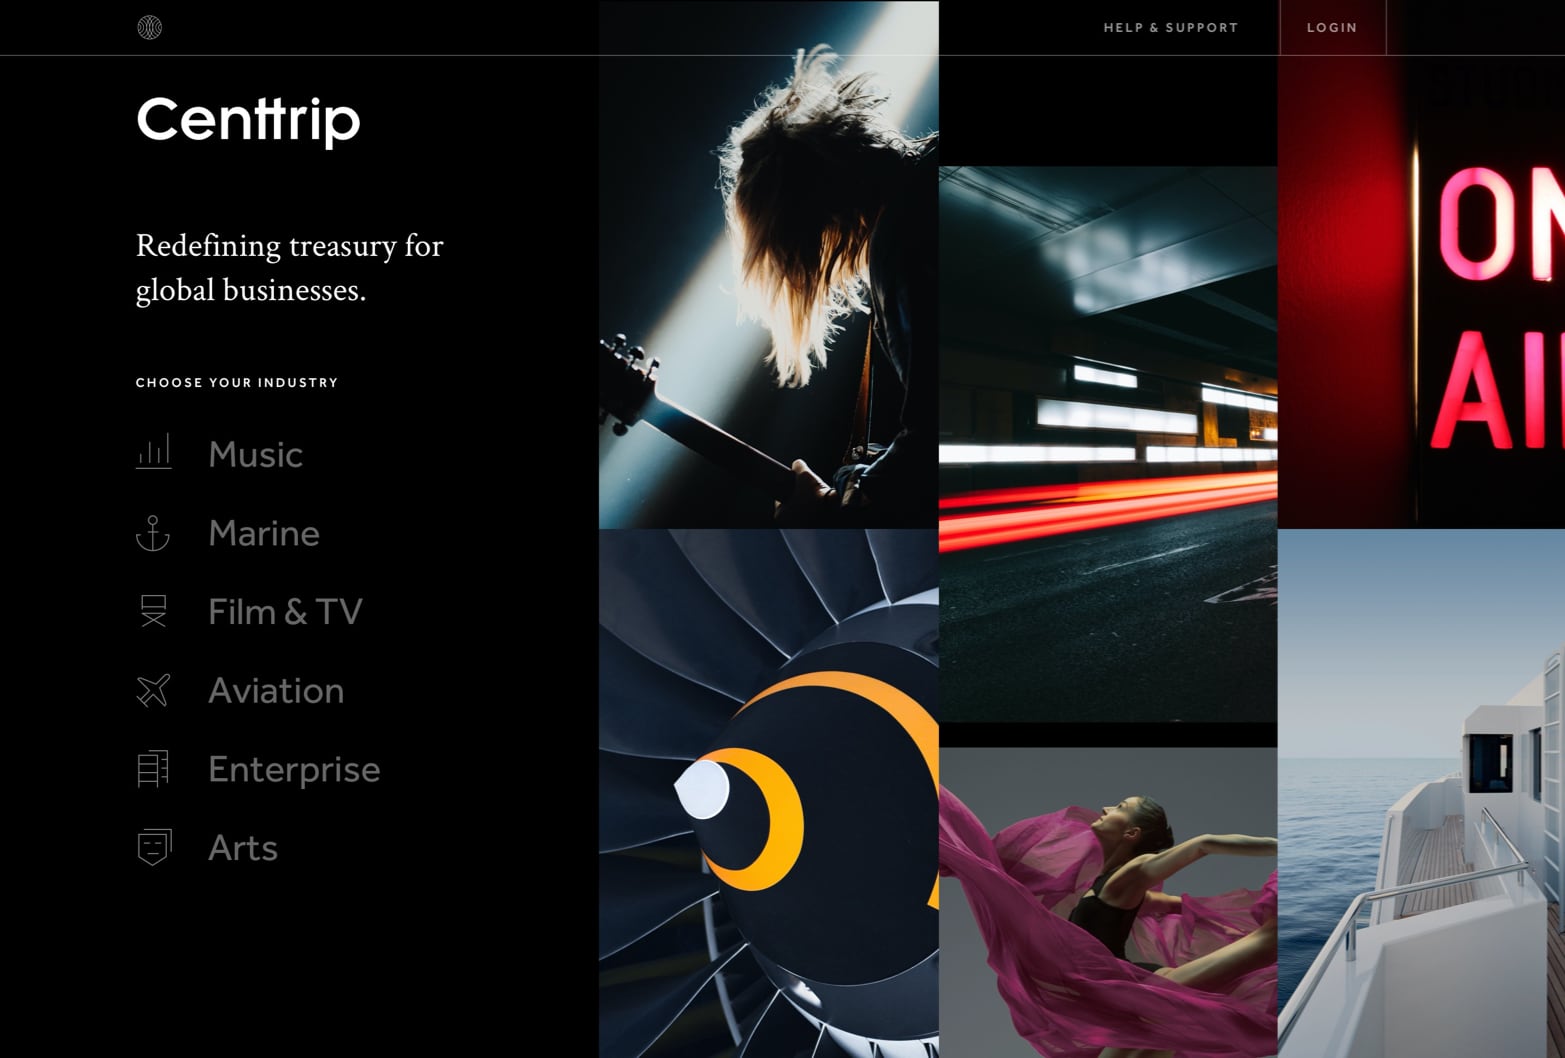 Homepage of the Centtrip website